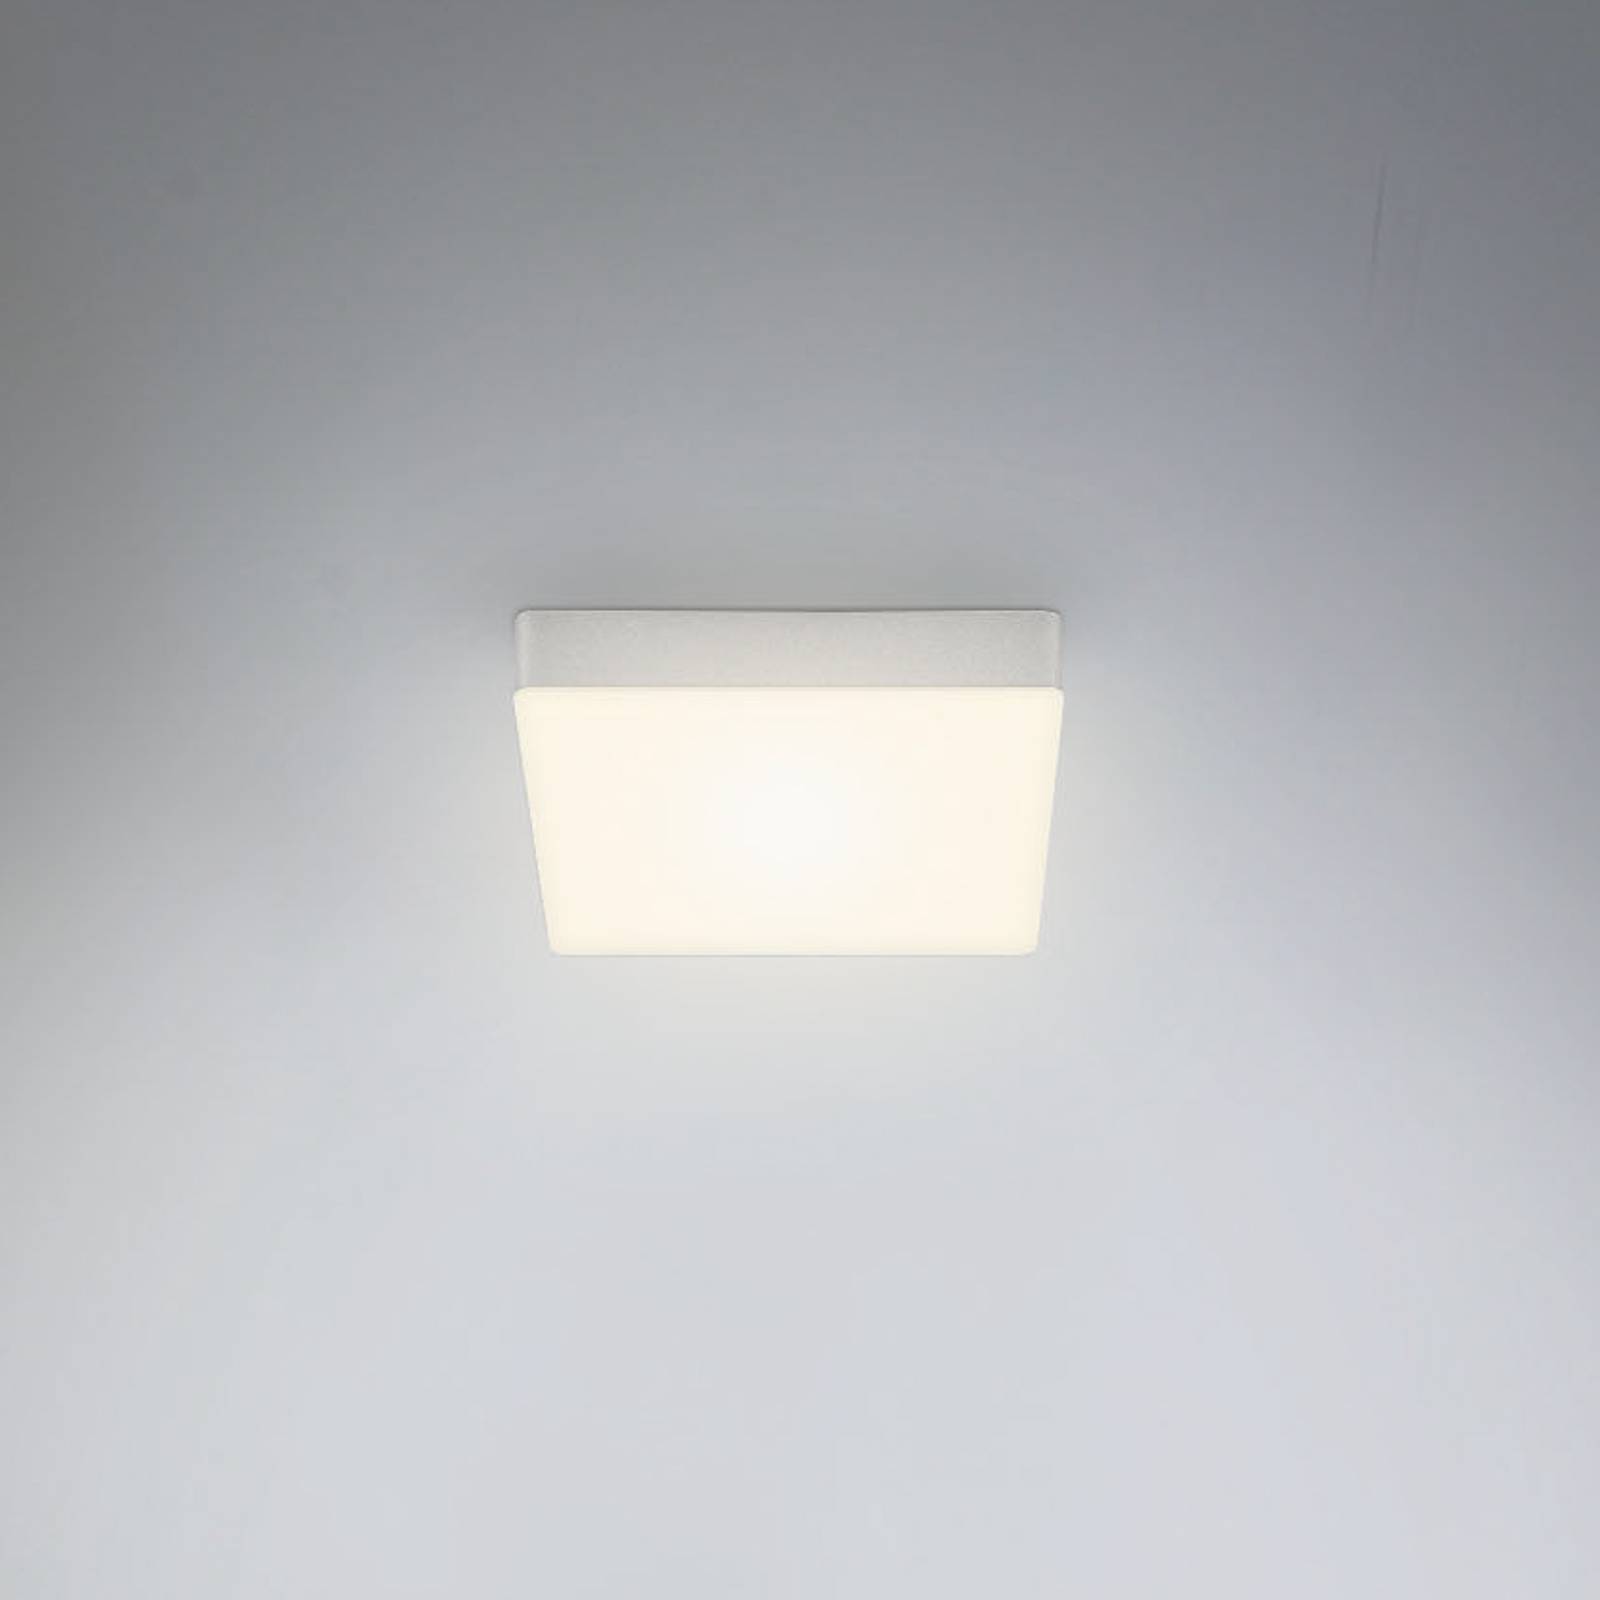 Lampa sufitowa LED Flame, 15,7 x 15,7 cm, srebrna